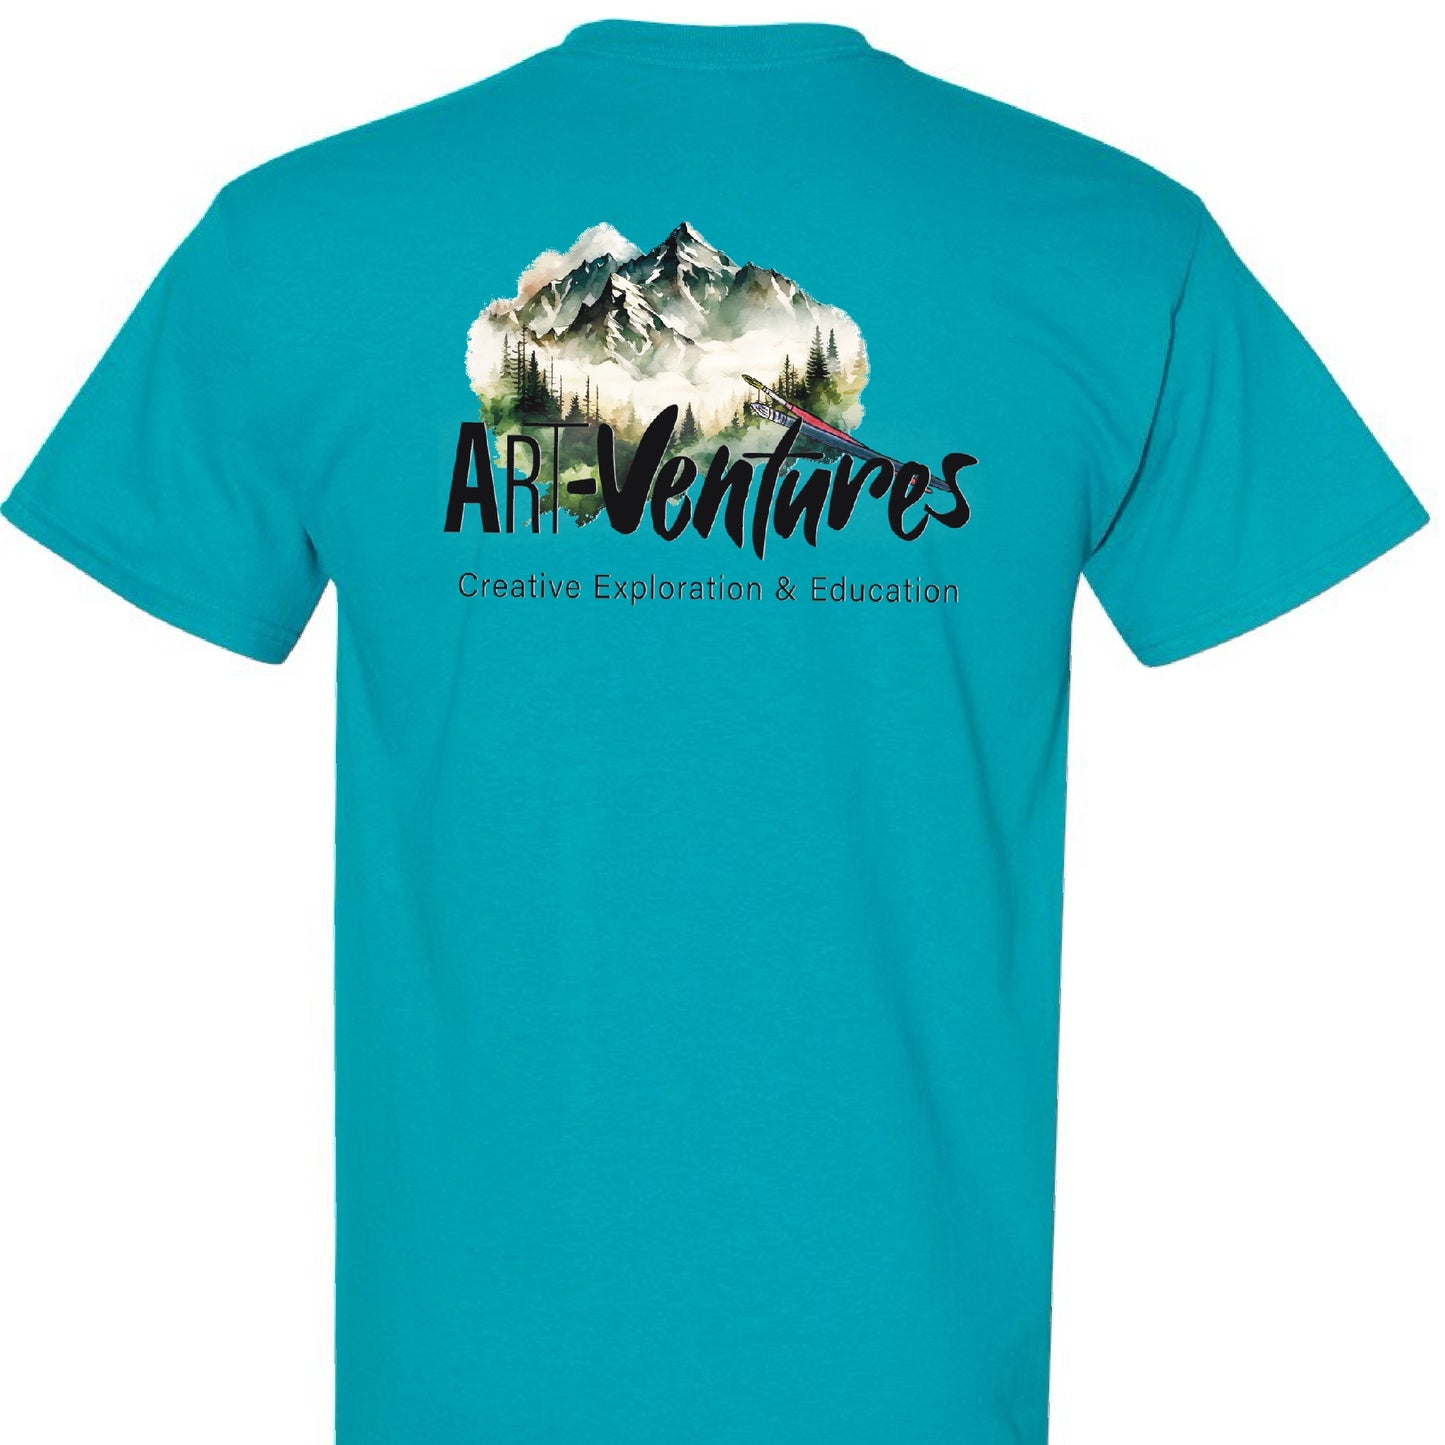 Art Ventures Graphic T-shirt Venture